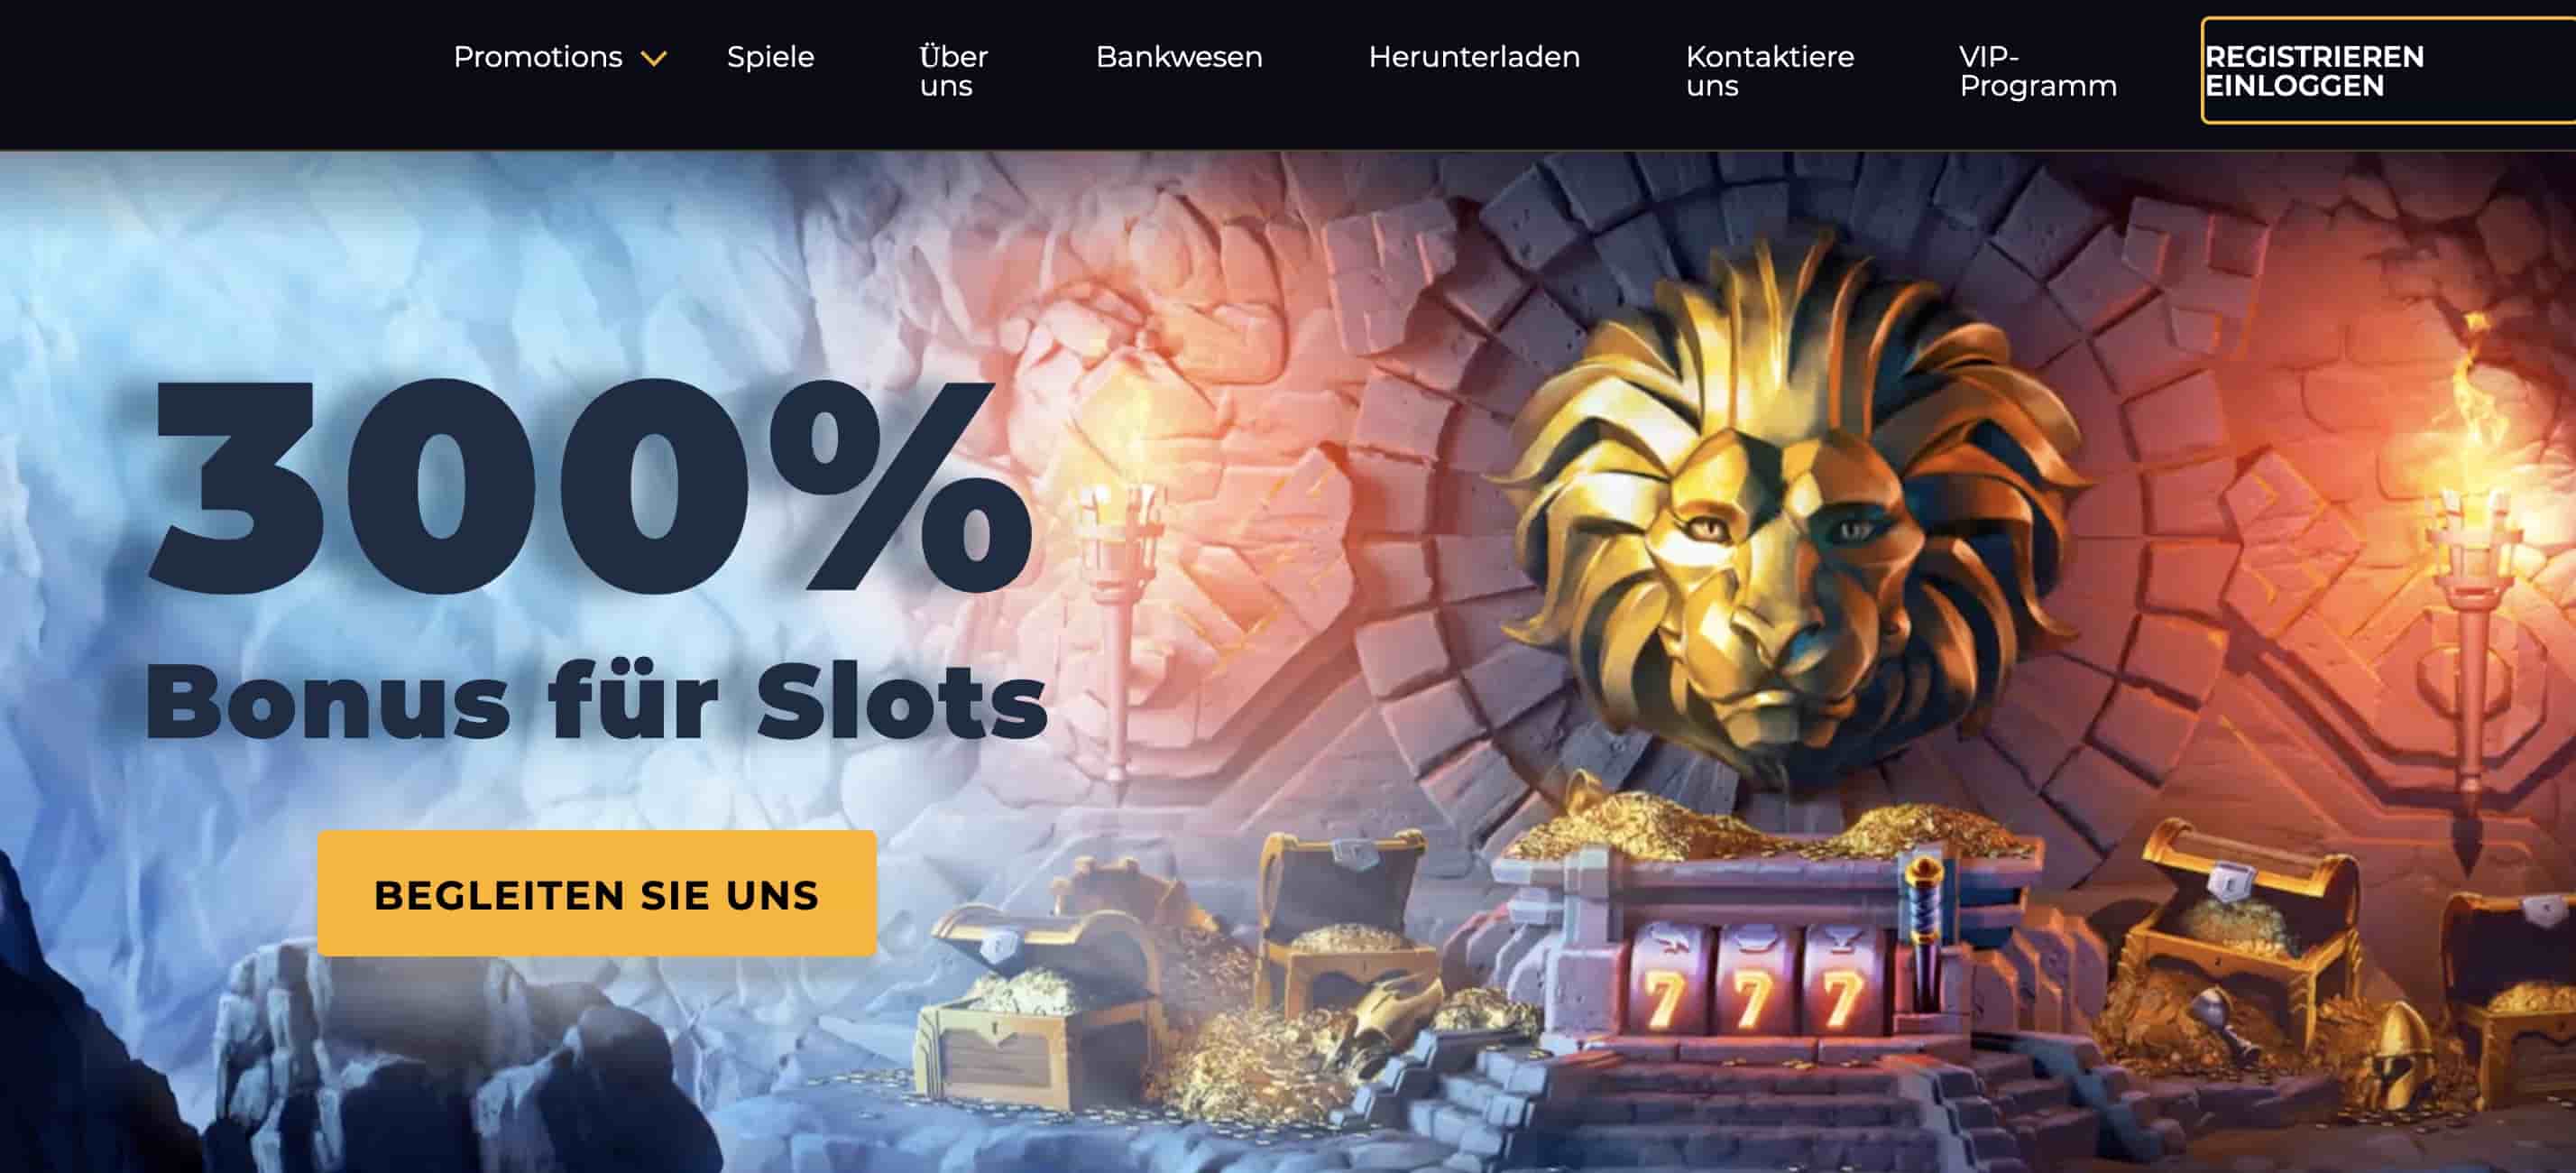 Golden Lion Casino Homepage